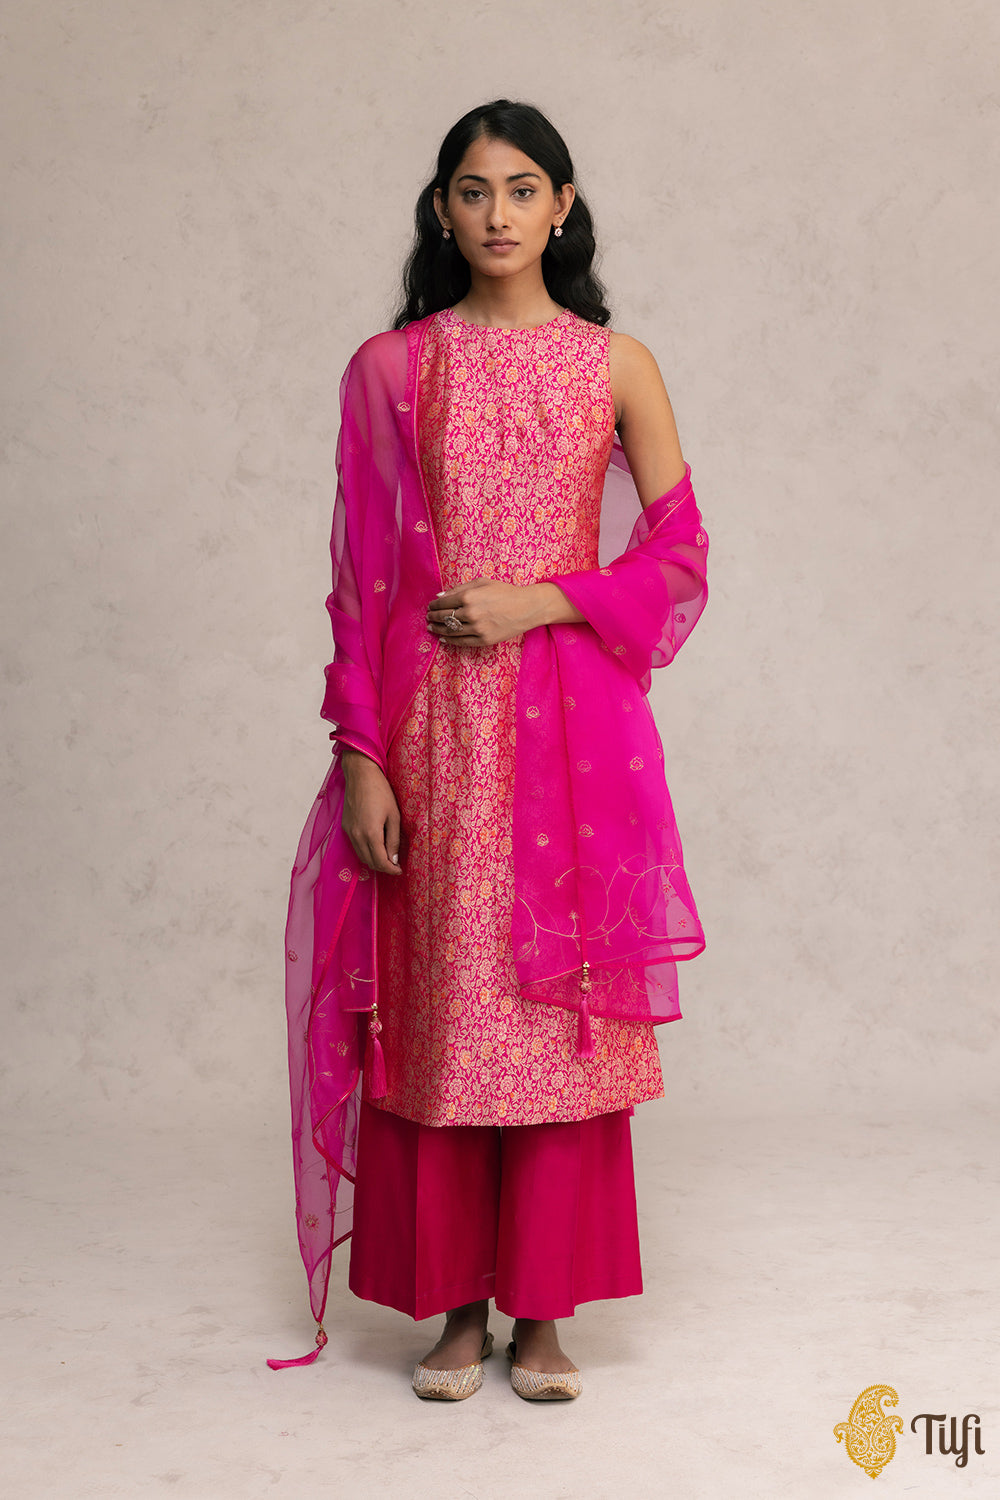 Trending Banarsi Suits Fabric & Designs in Pakistan | PakStyle Fashion Blog